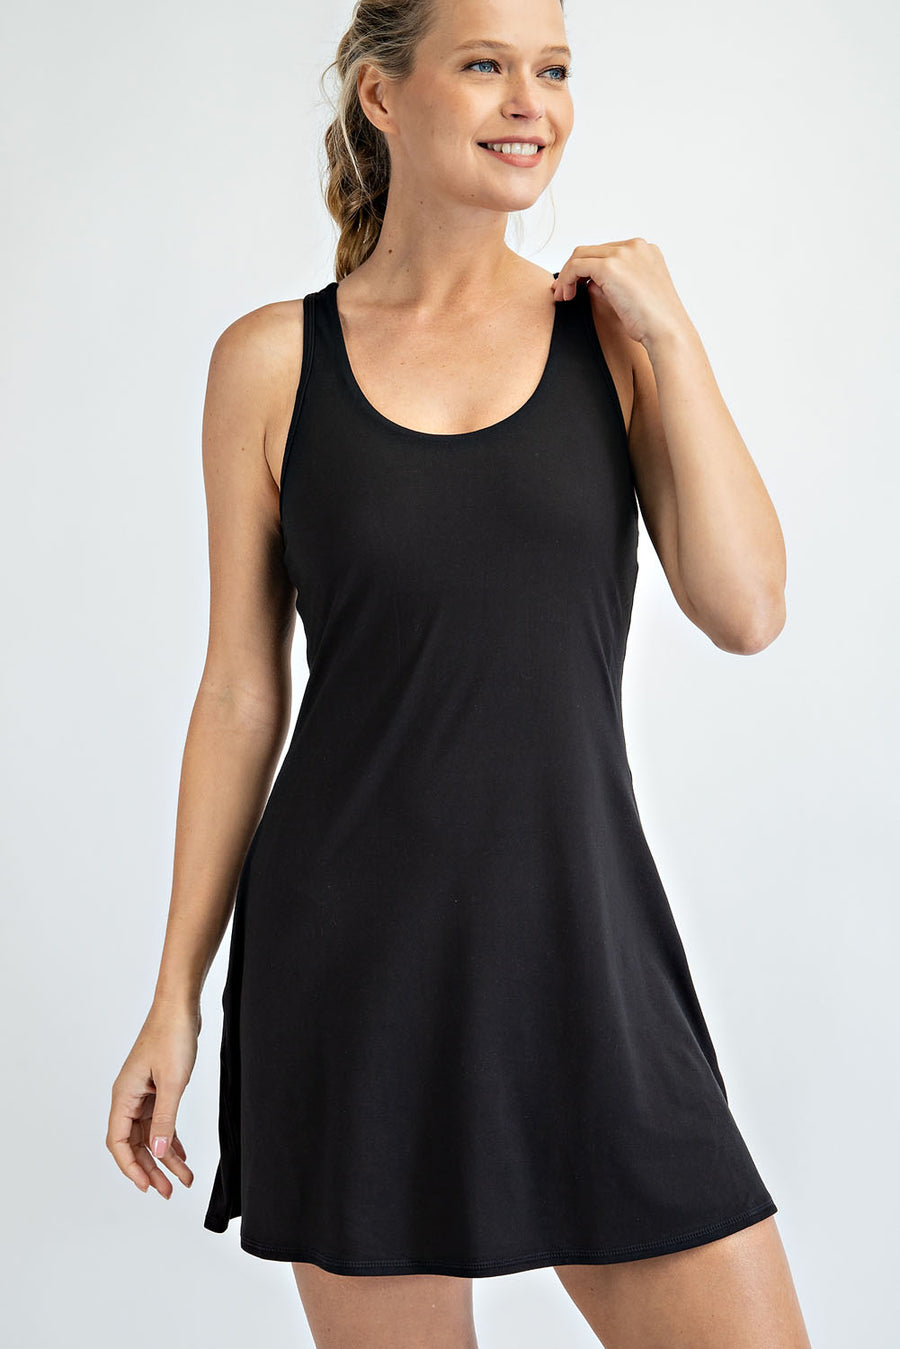 Venus Tennis Romper Dress | Black